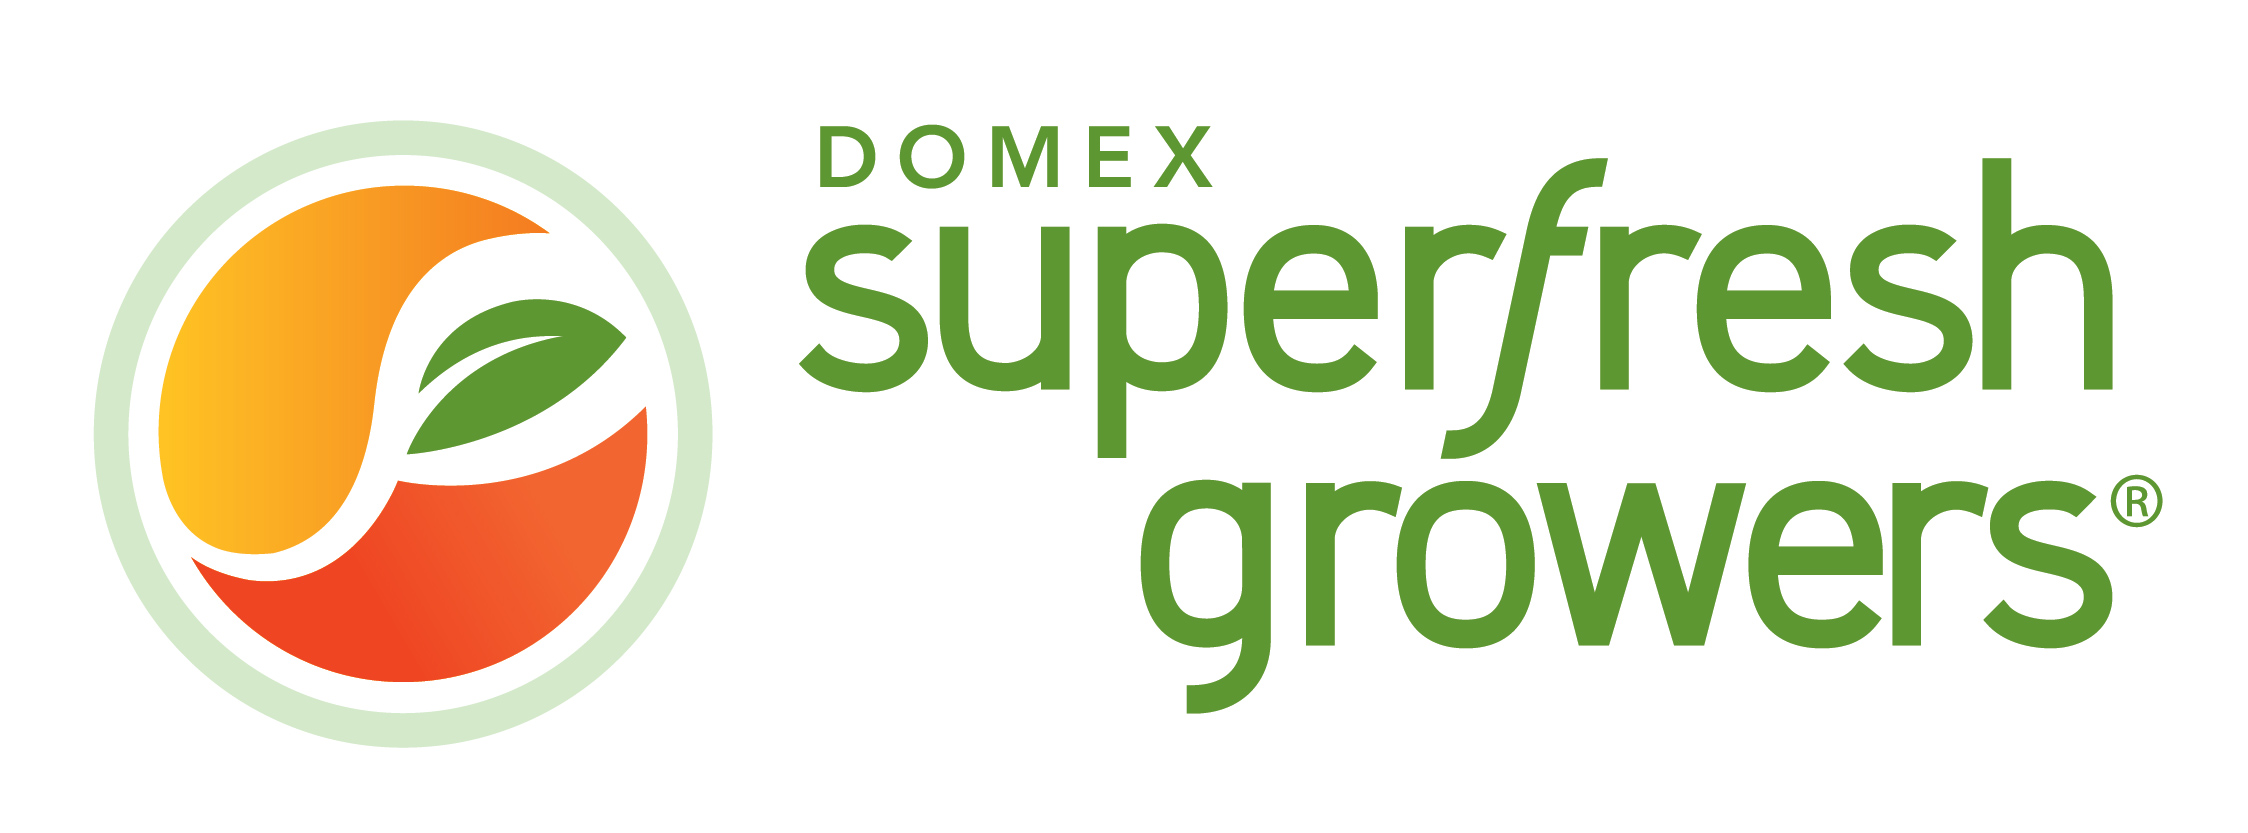 Domex Superfresh Growers